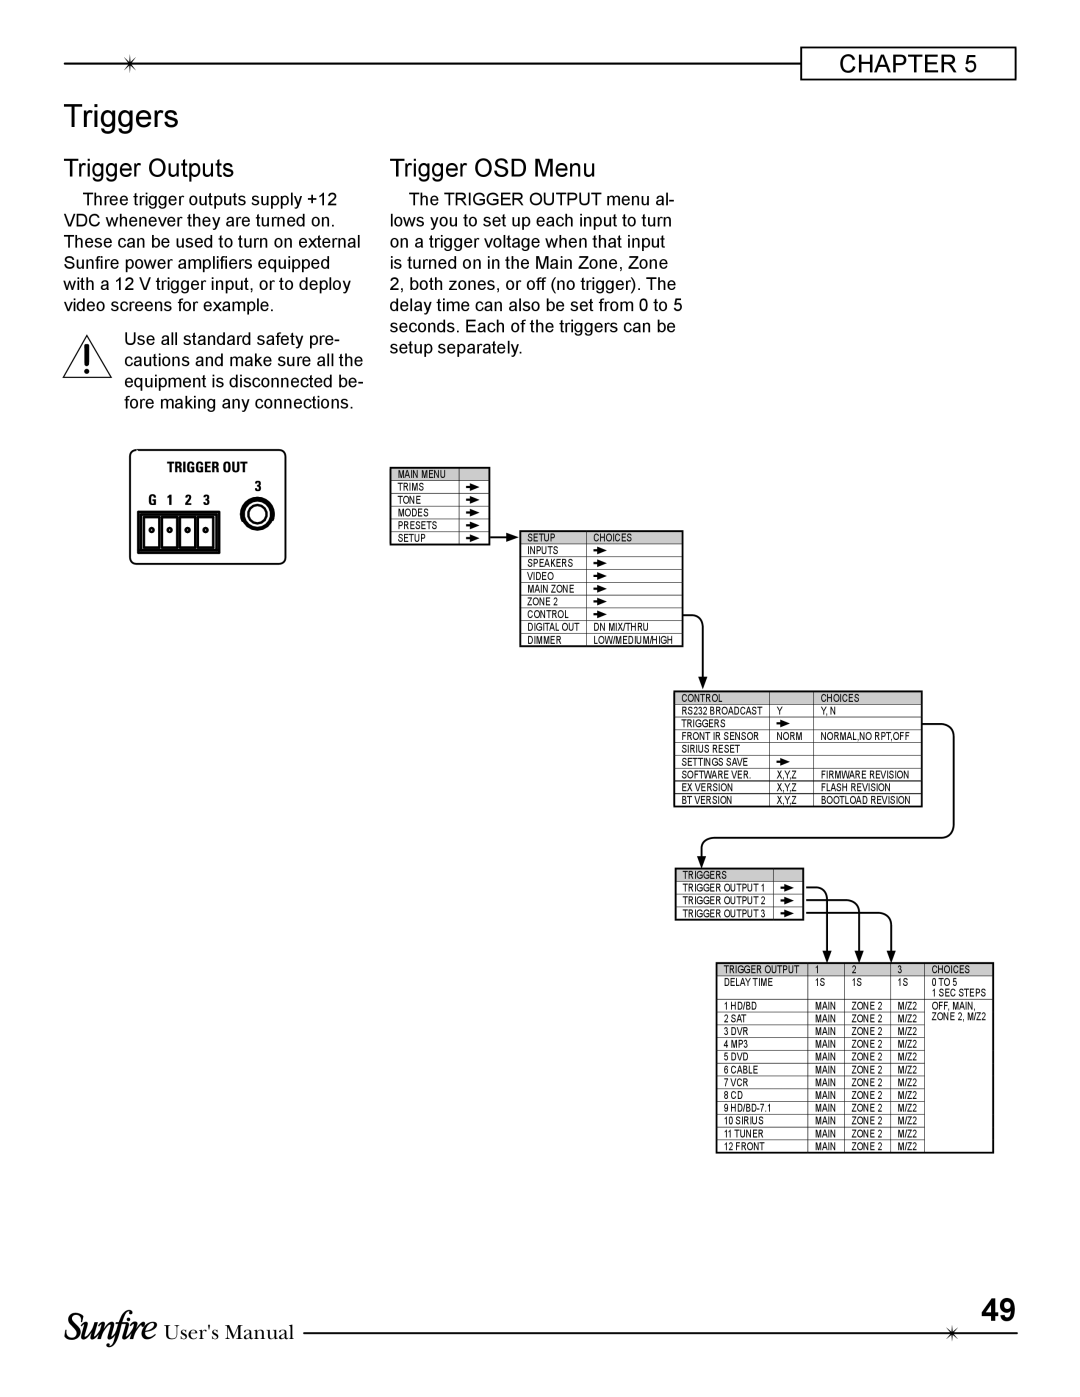 Sunfire TGR-401-230 manual Triggers, Trigger Outputs, CHAPTER Trigger OSD Menu, Users Manual 